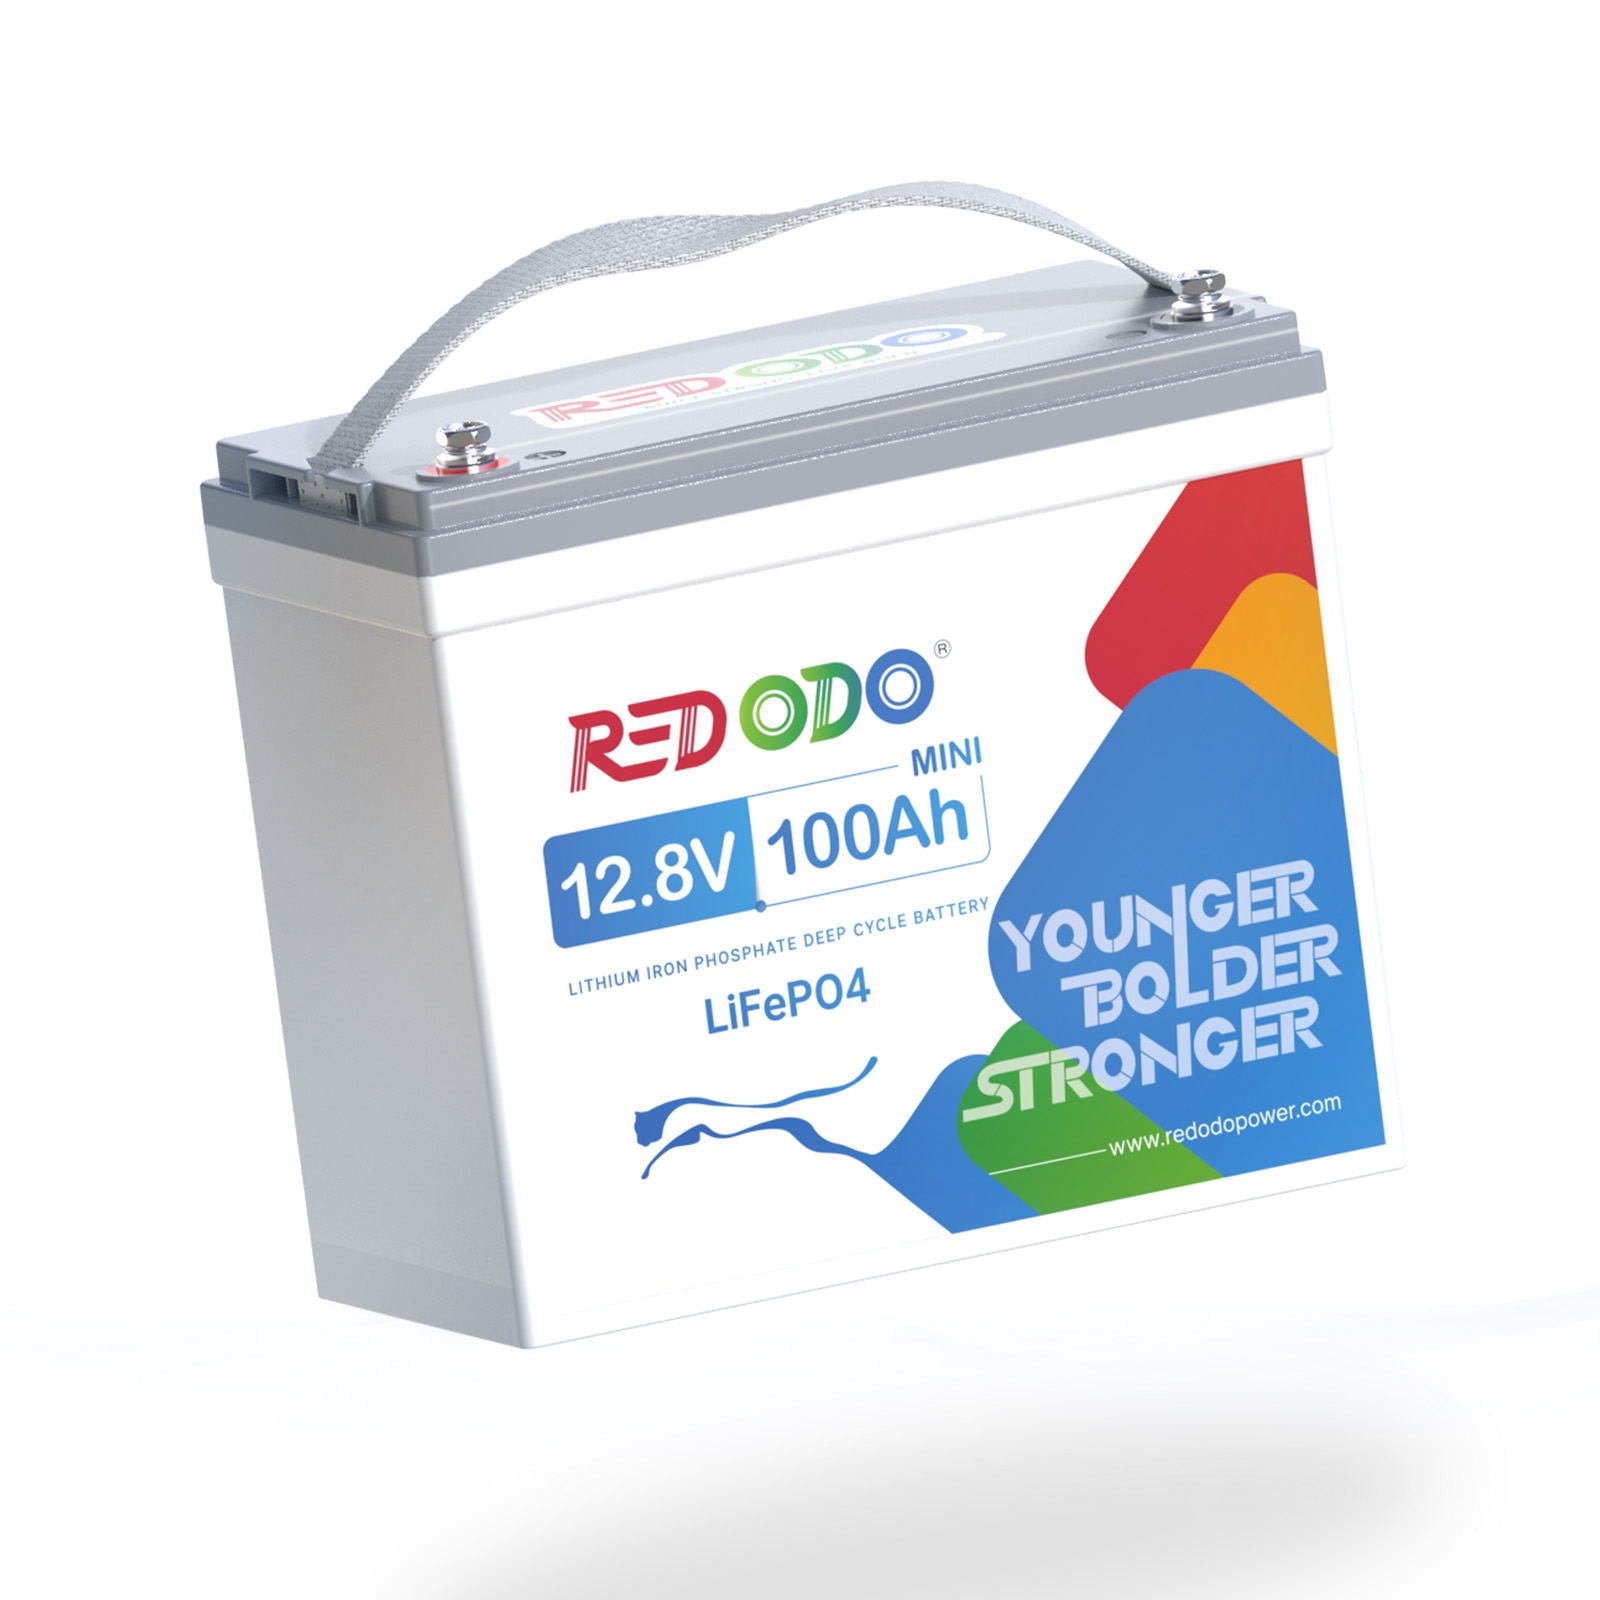 【Only $229】Redodo 12V 100Ah Mini LiFePO4 battery | 1.28kWh & 1.28kW Redodo